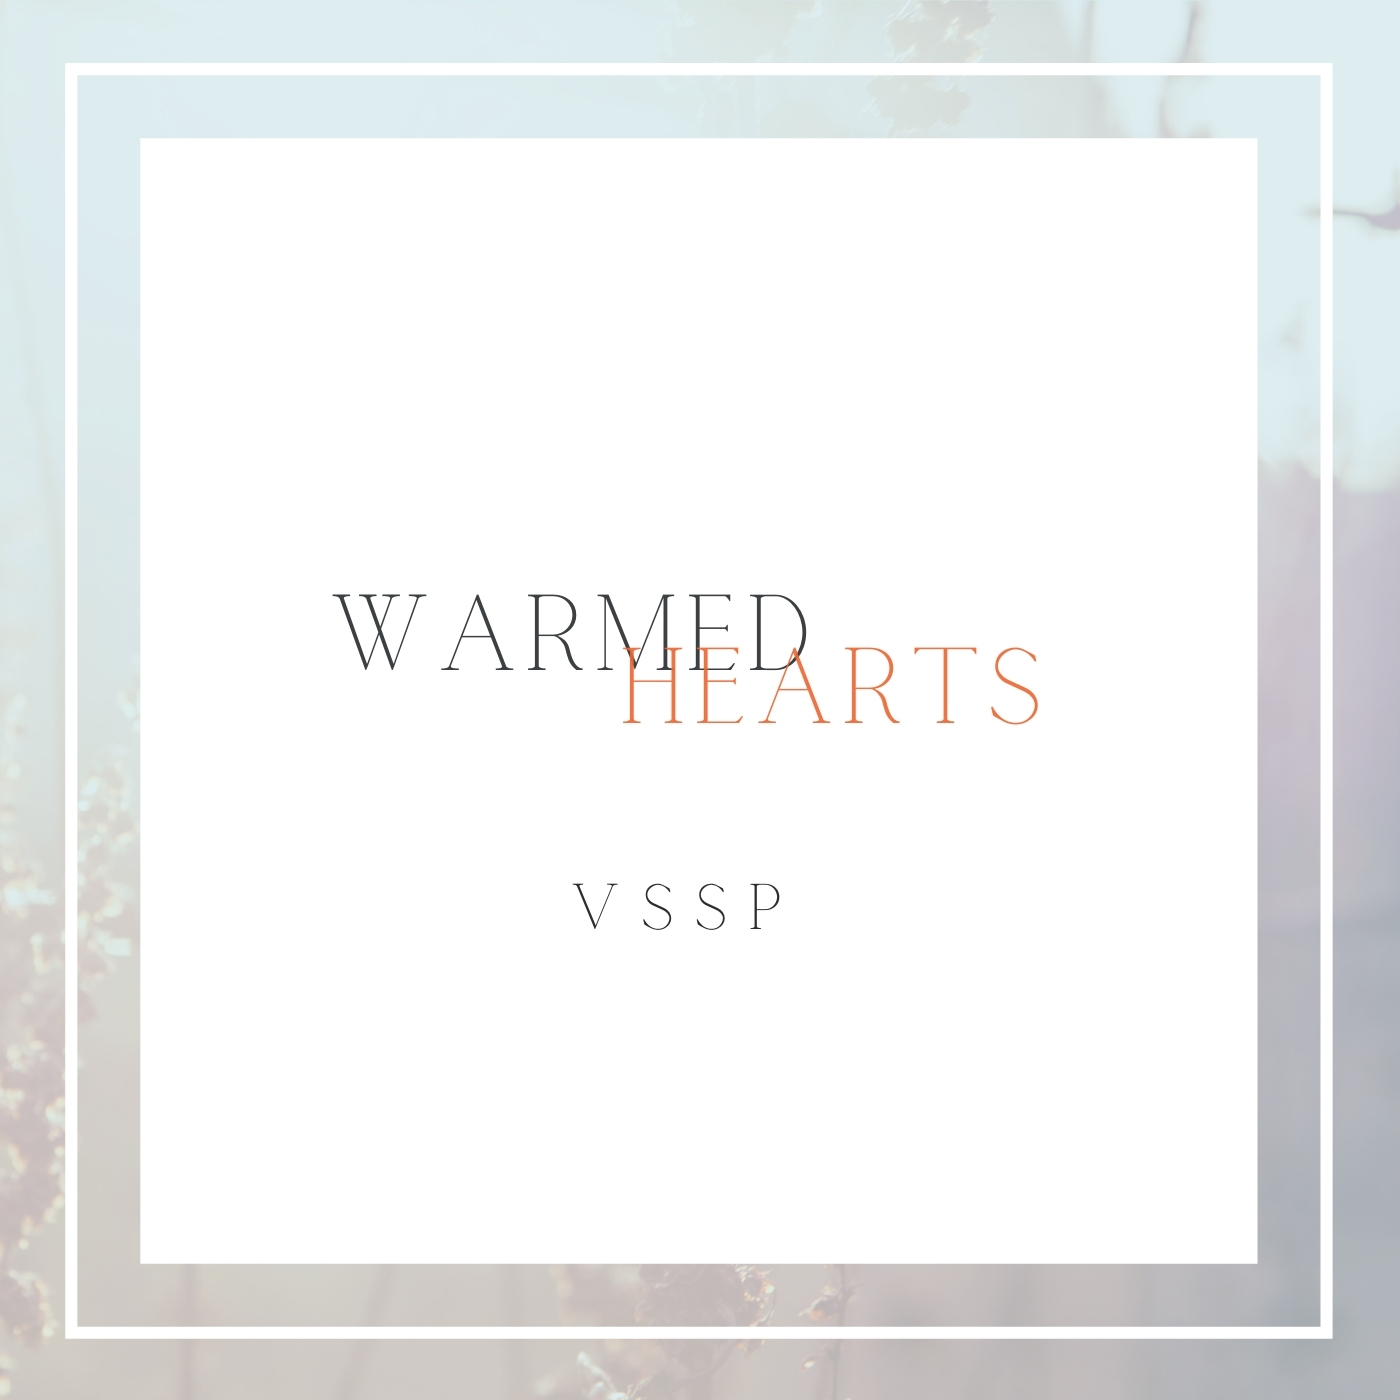 vssp - Warmed hearts (2020)